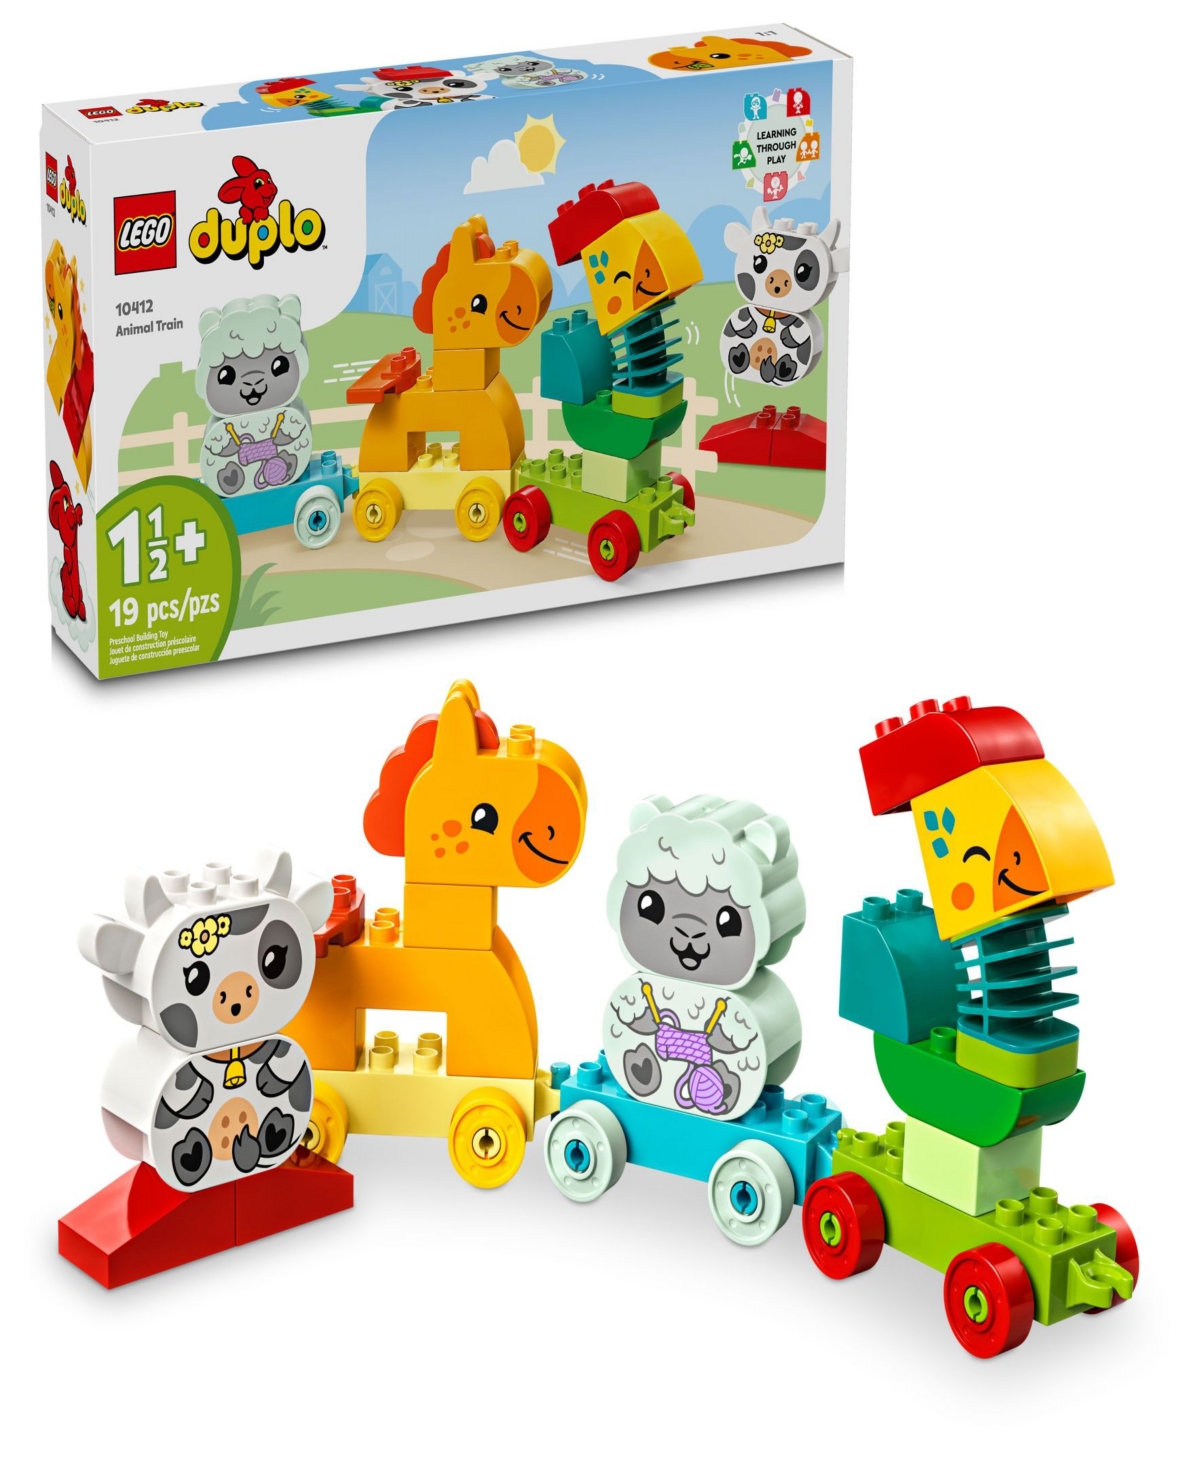 Lego Kids' Duplo 10412 Animal Train Toy Building Set In Multicolor